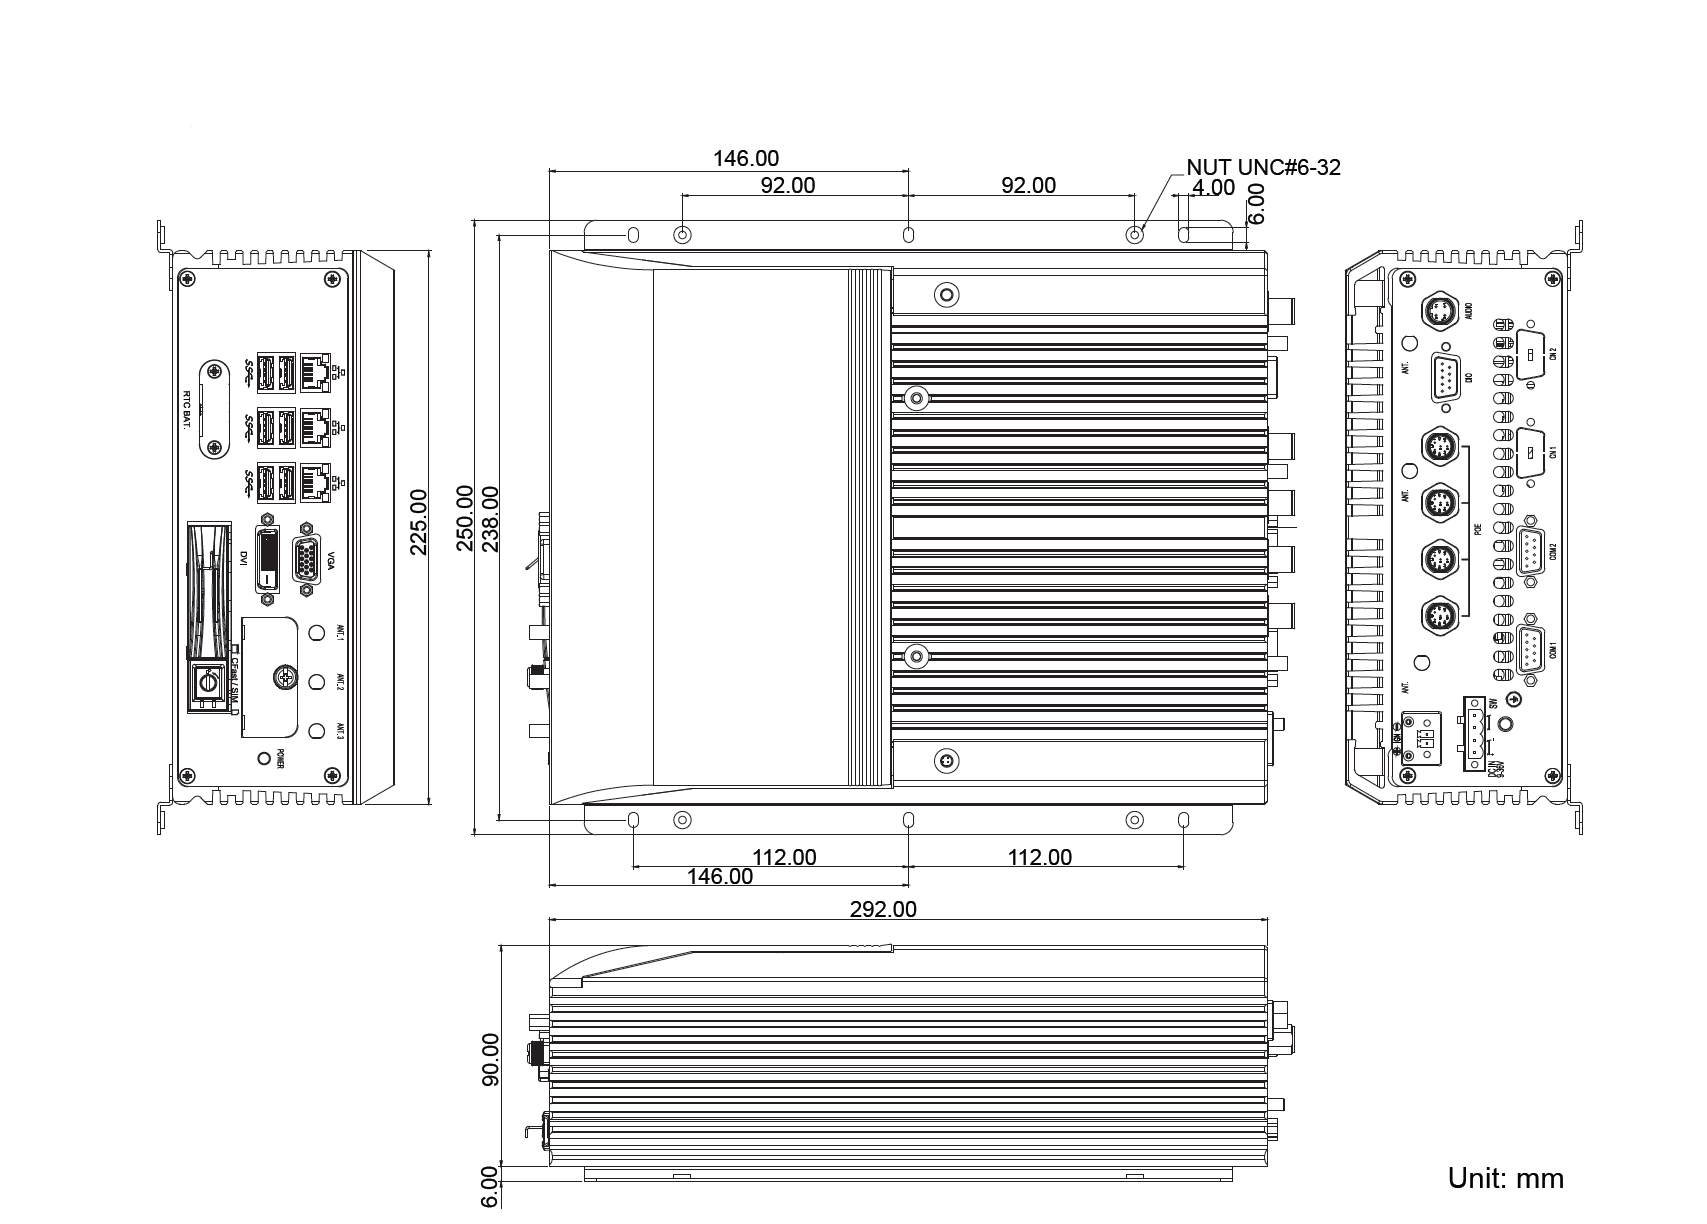 Embedded PC FPC-9000-V1 R1.0 Skizze